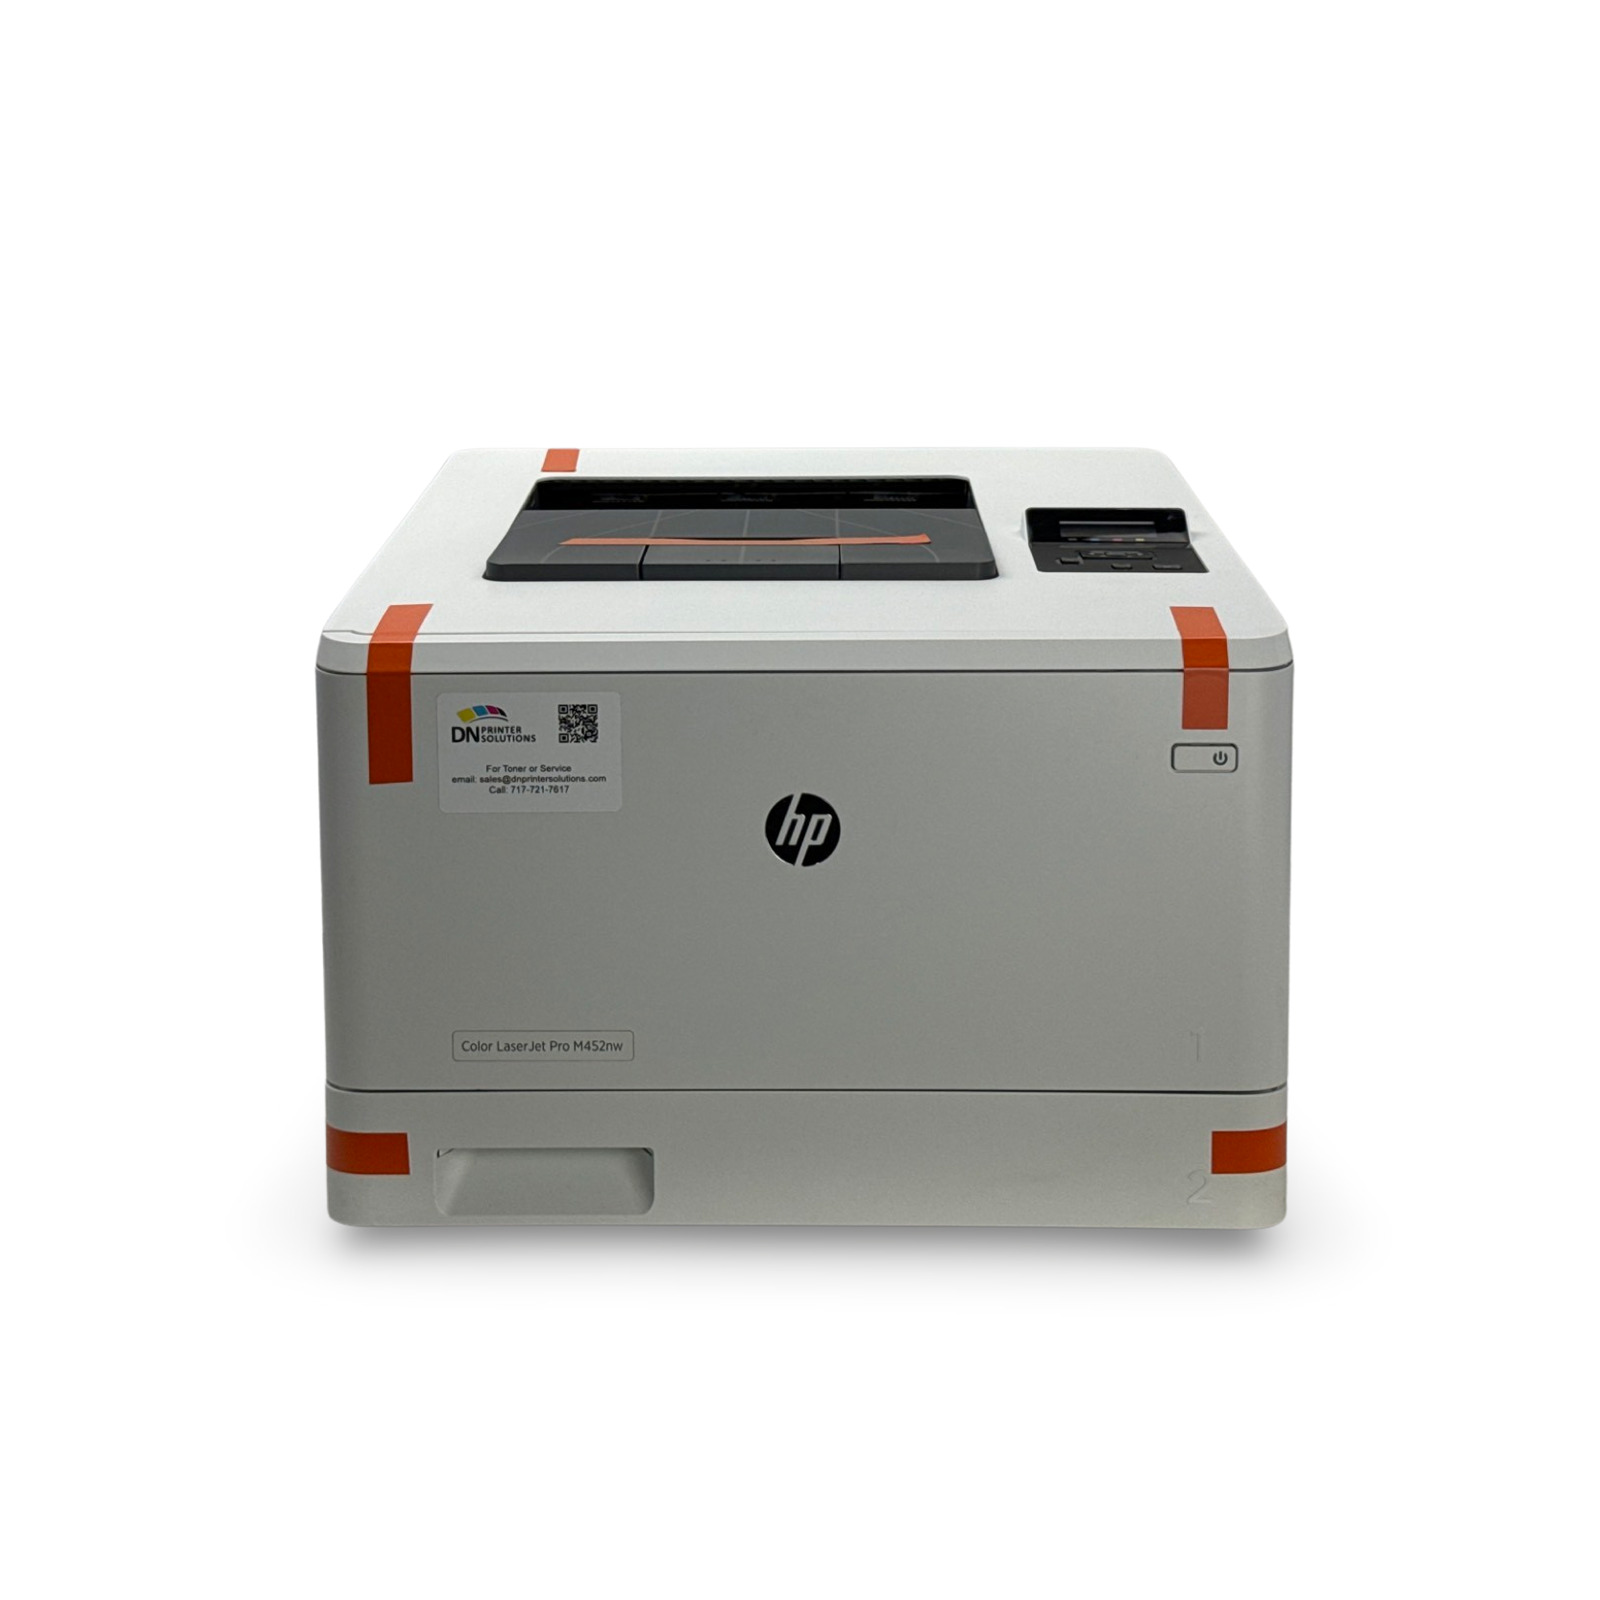 HP LaserJet Pro M452nw CF388A Wireless Color Laser Printer w/ NEW Toner